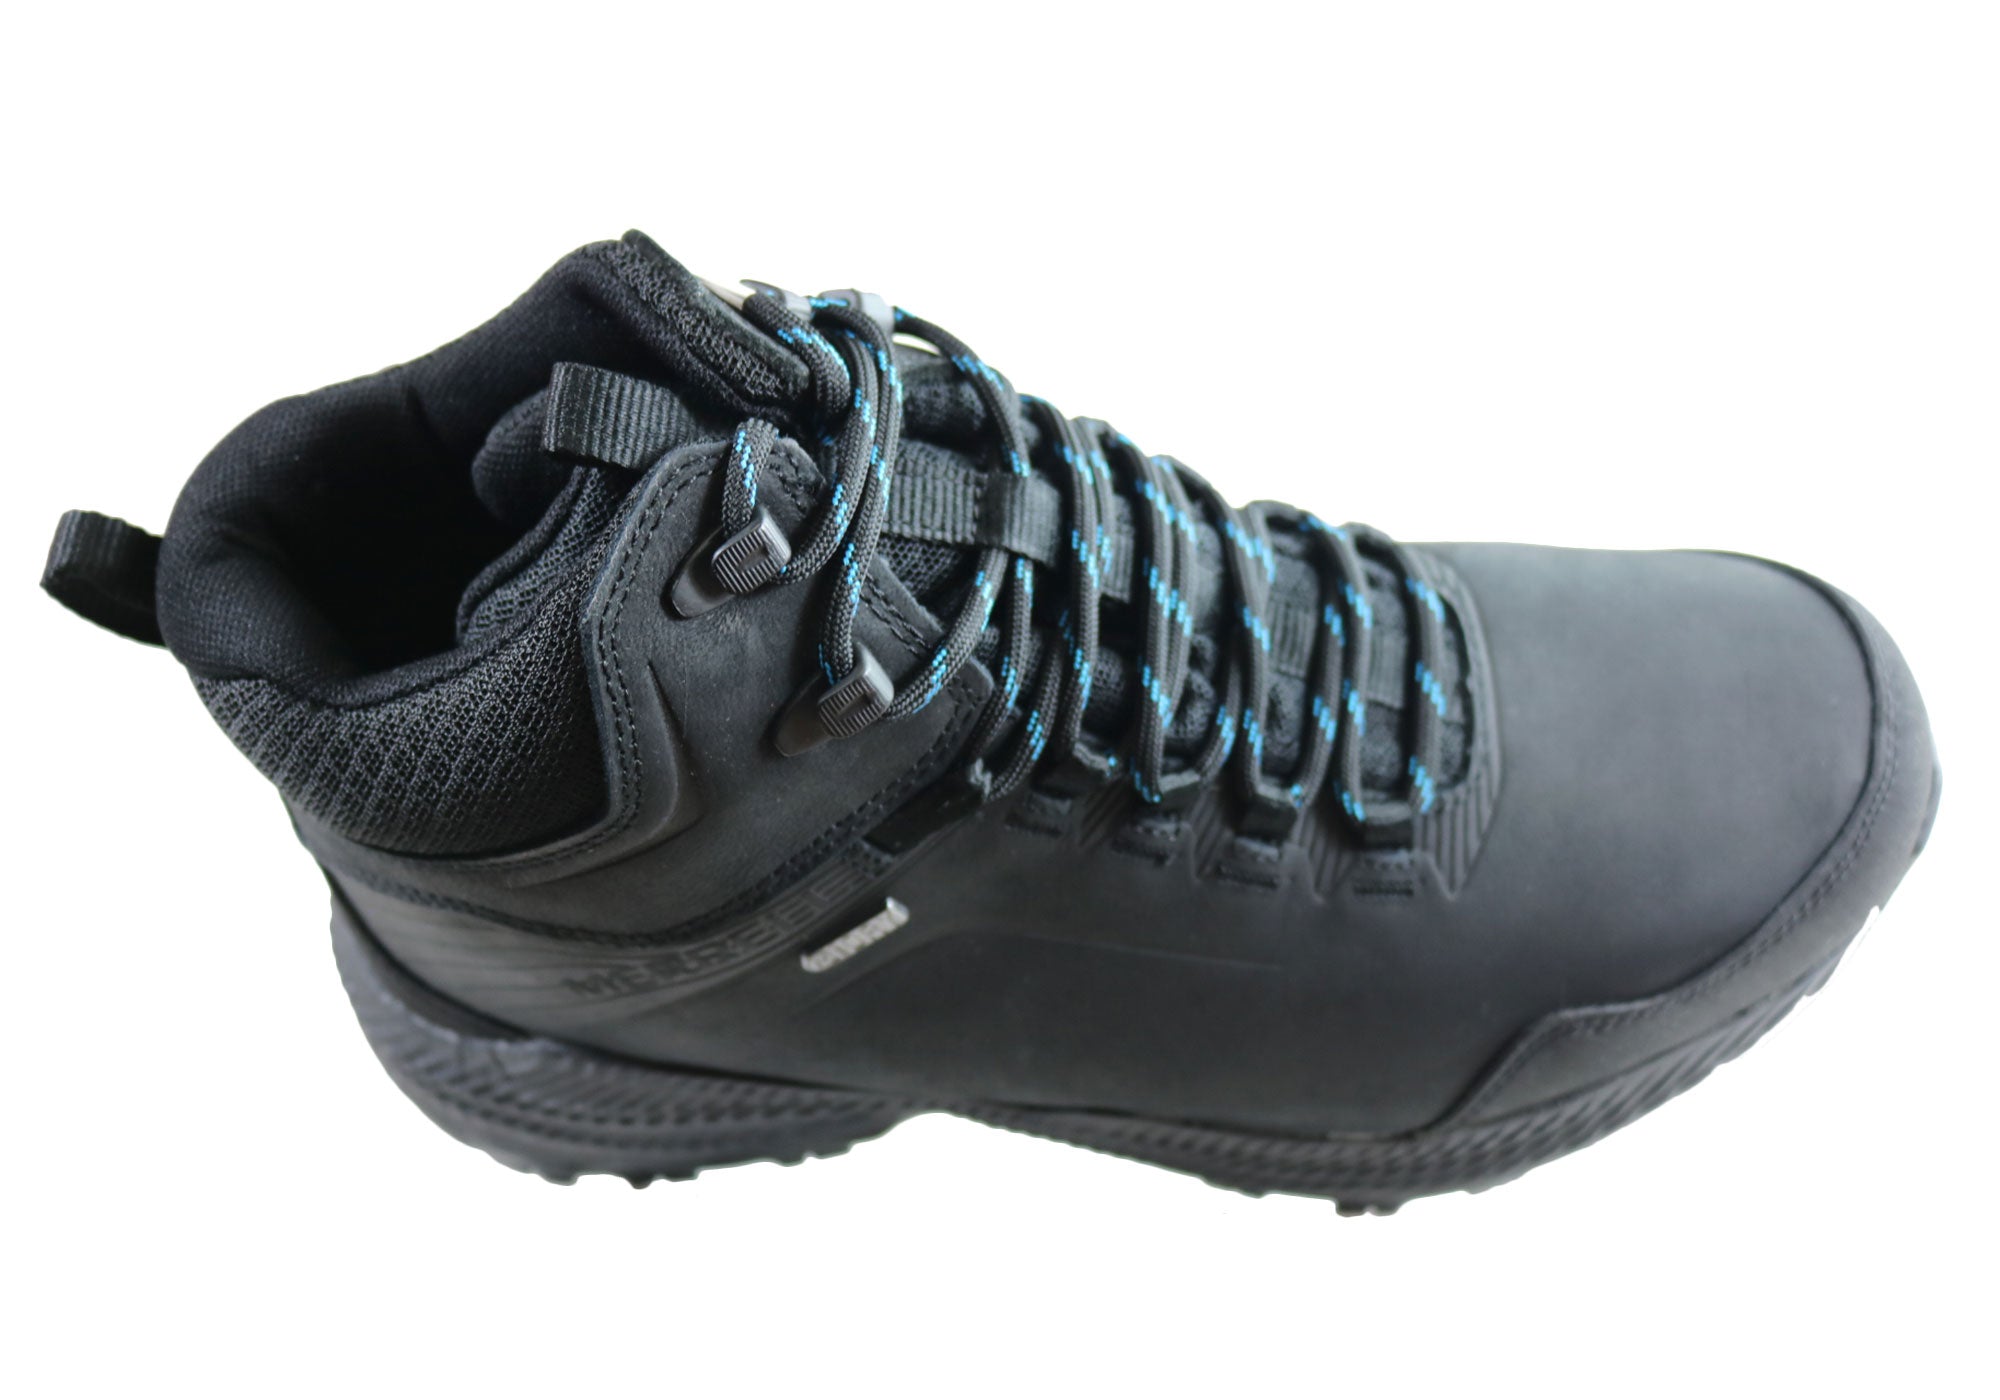 waterproof hiking shoes on sale